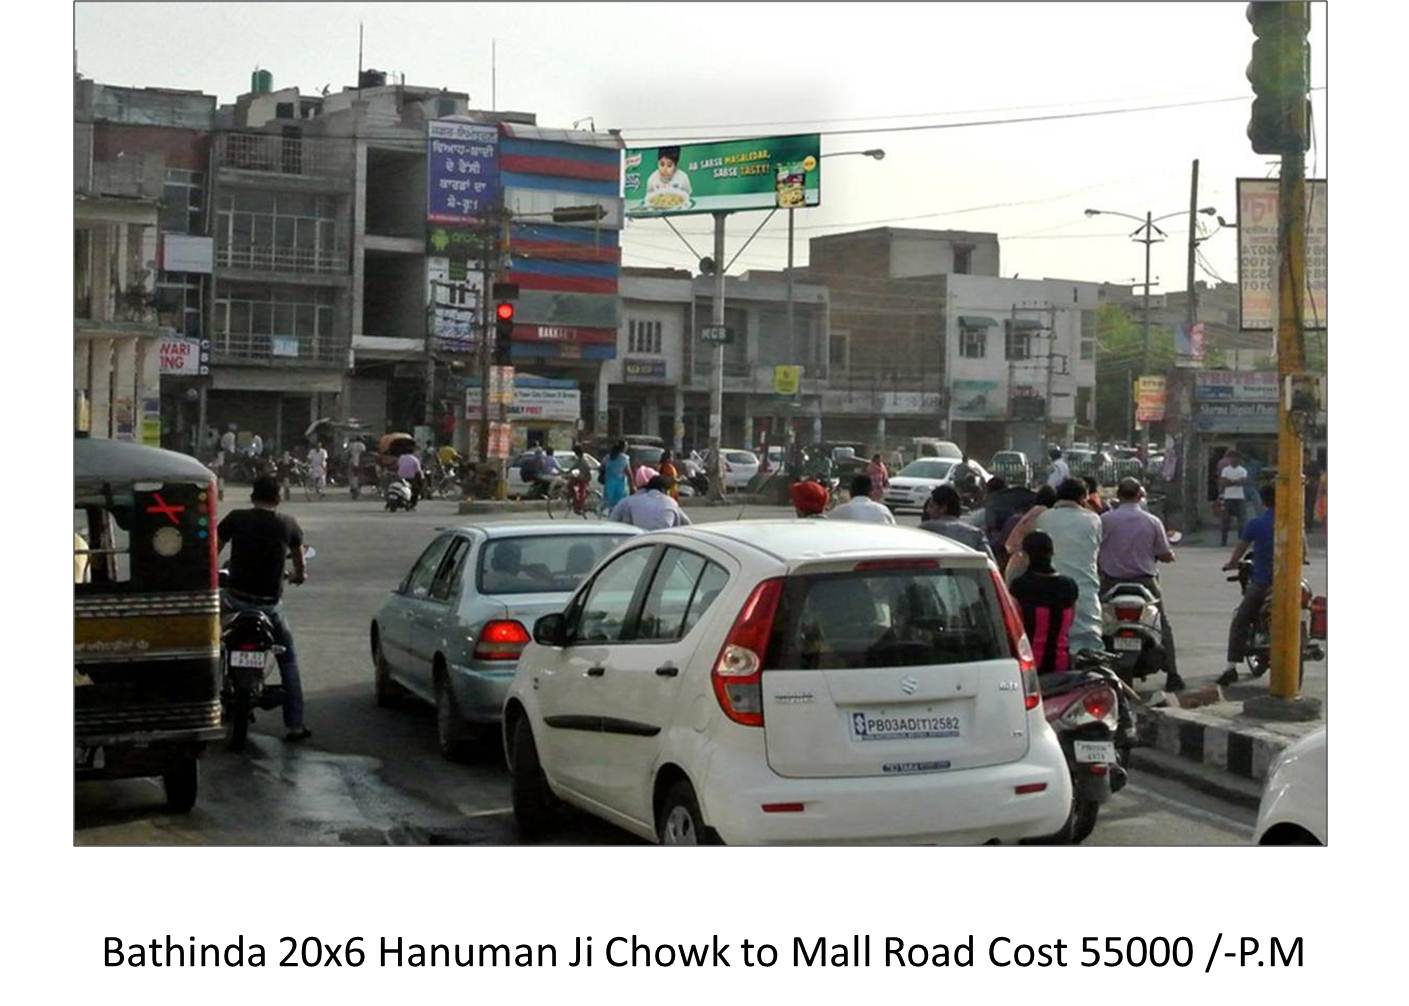 Hanuman Chowk to Mall Road, Bathinda